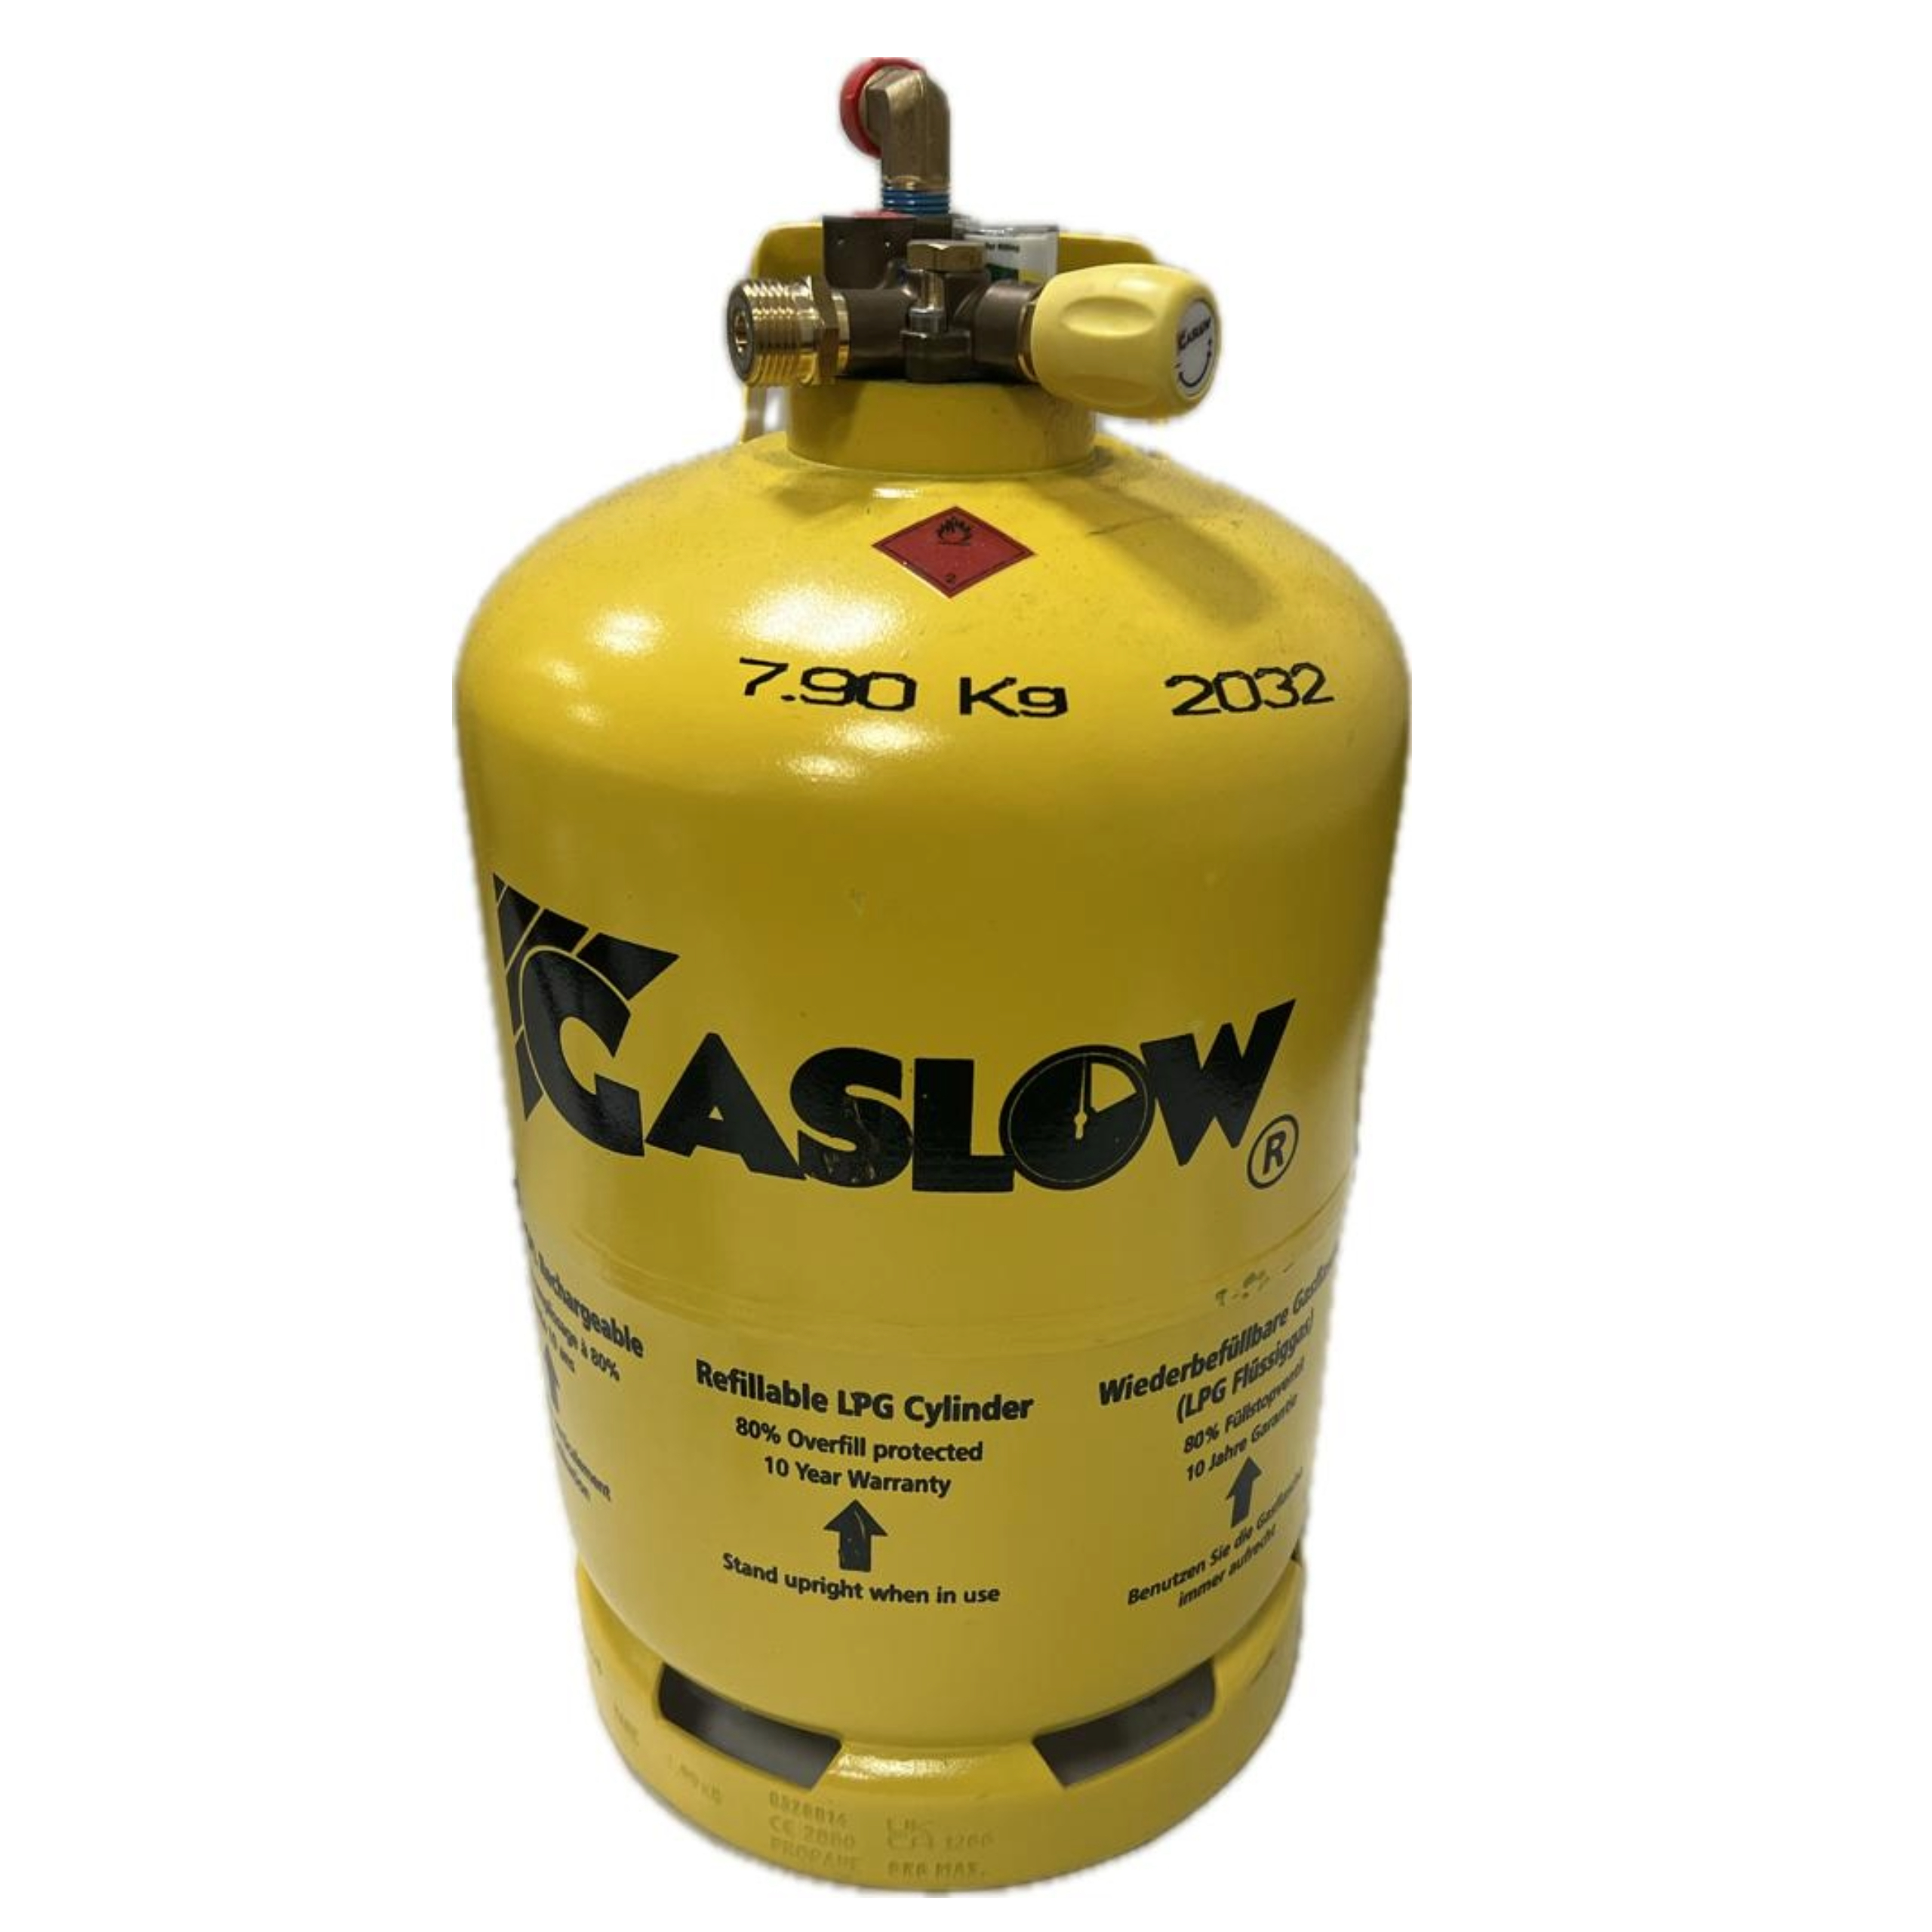 Gasflasche Gaslow 6 kg gelb 2020 wiederbefüllbar (460x246mm)+Adapter